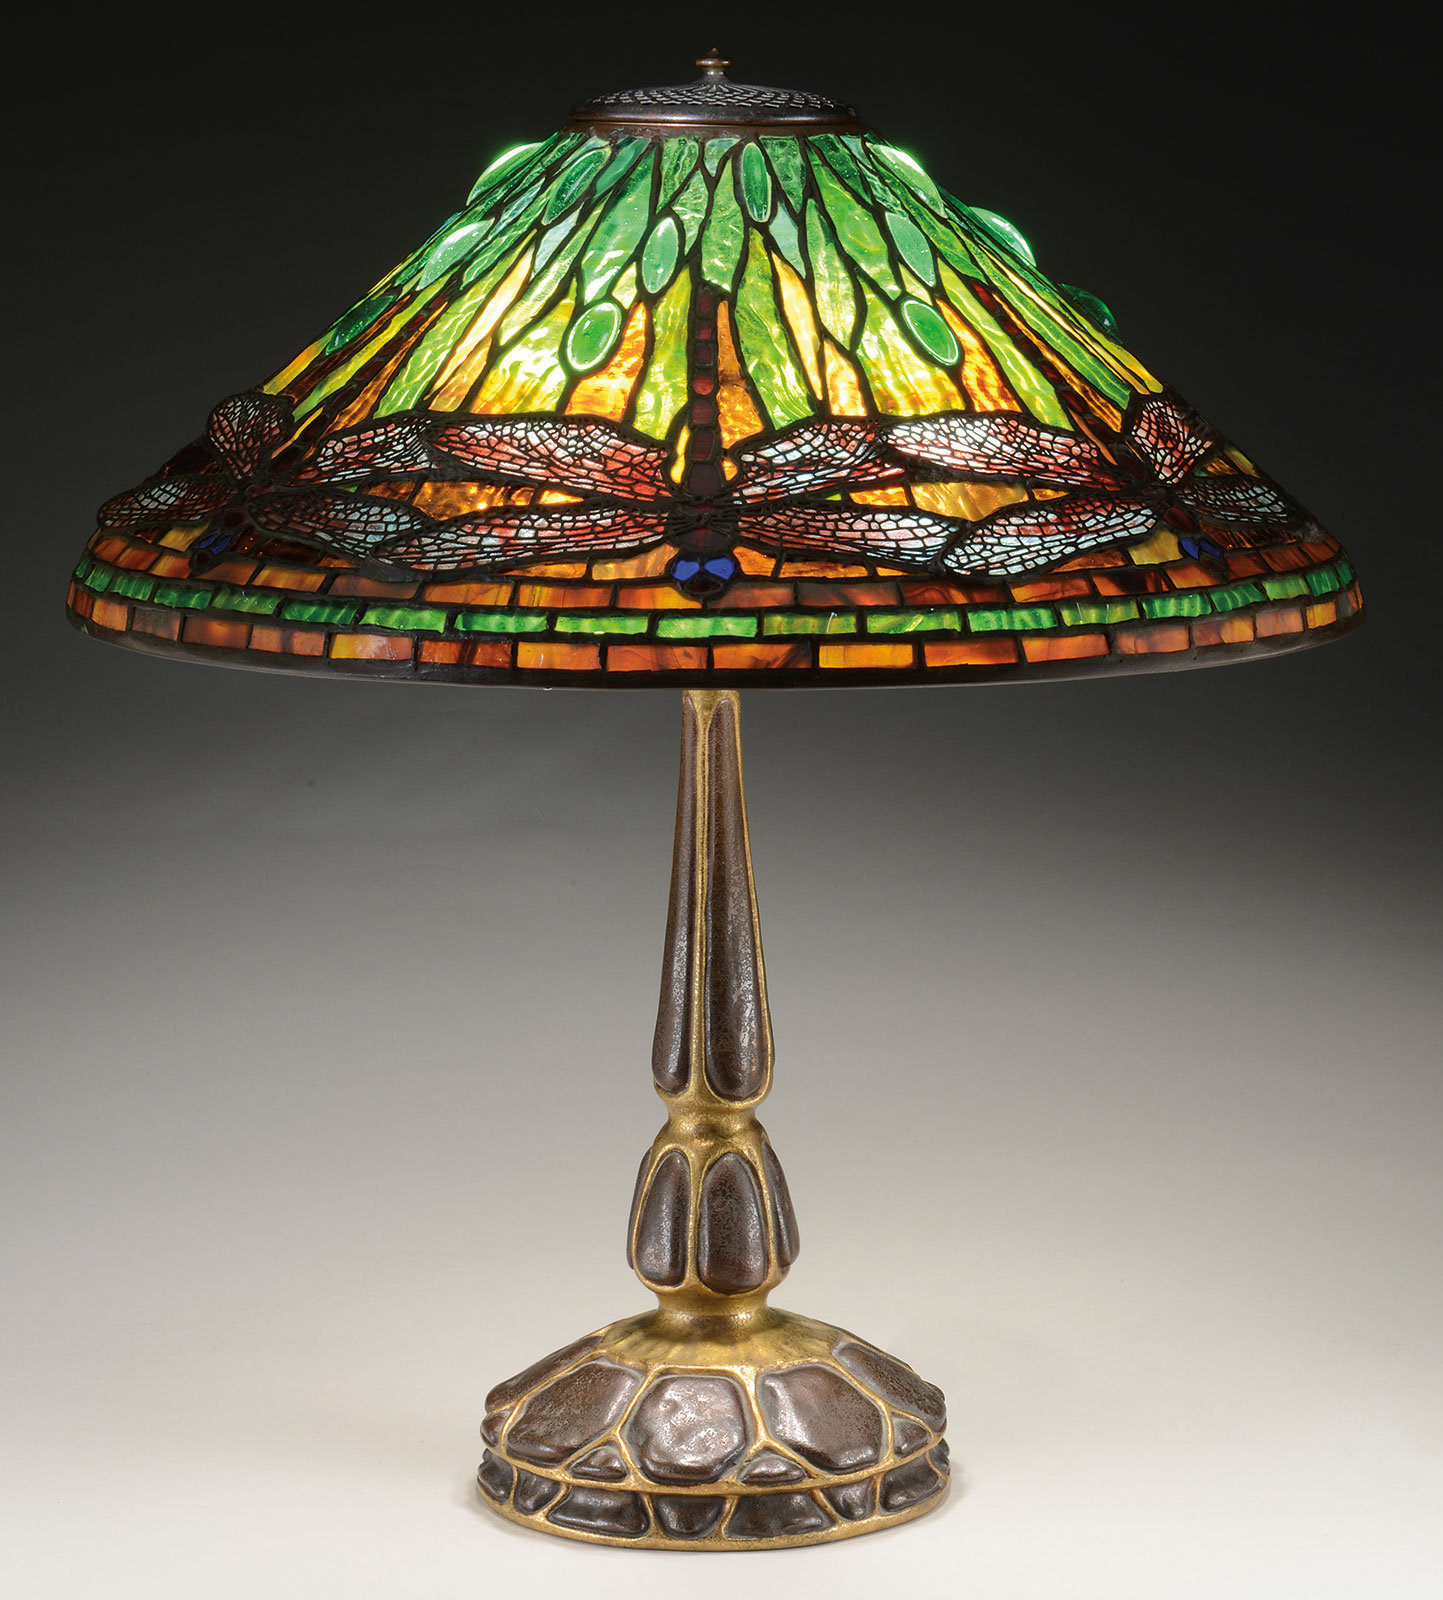 Tiffany Studios Dragonfly Table Lamp, estimated at $60,000-80,000.